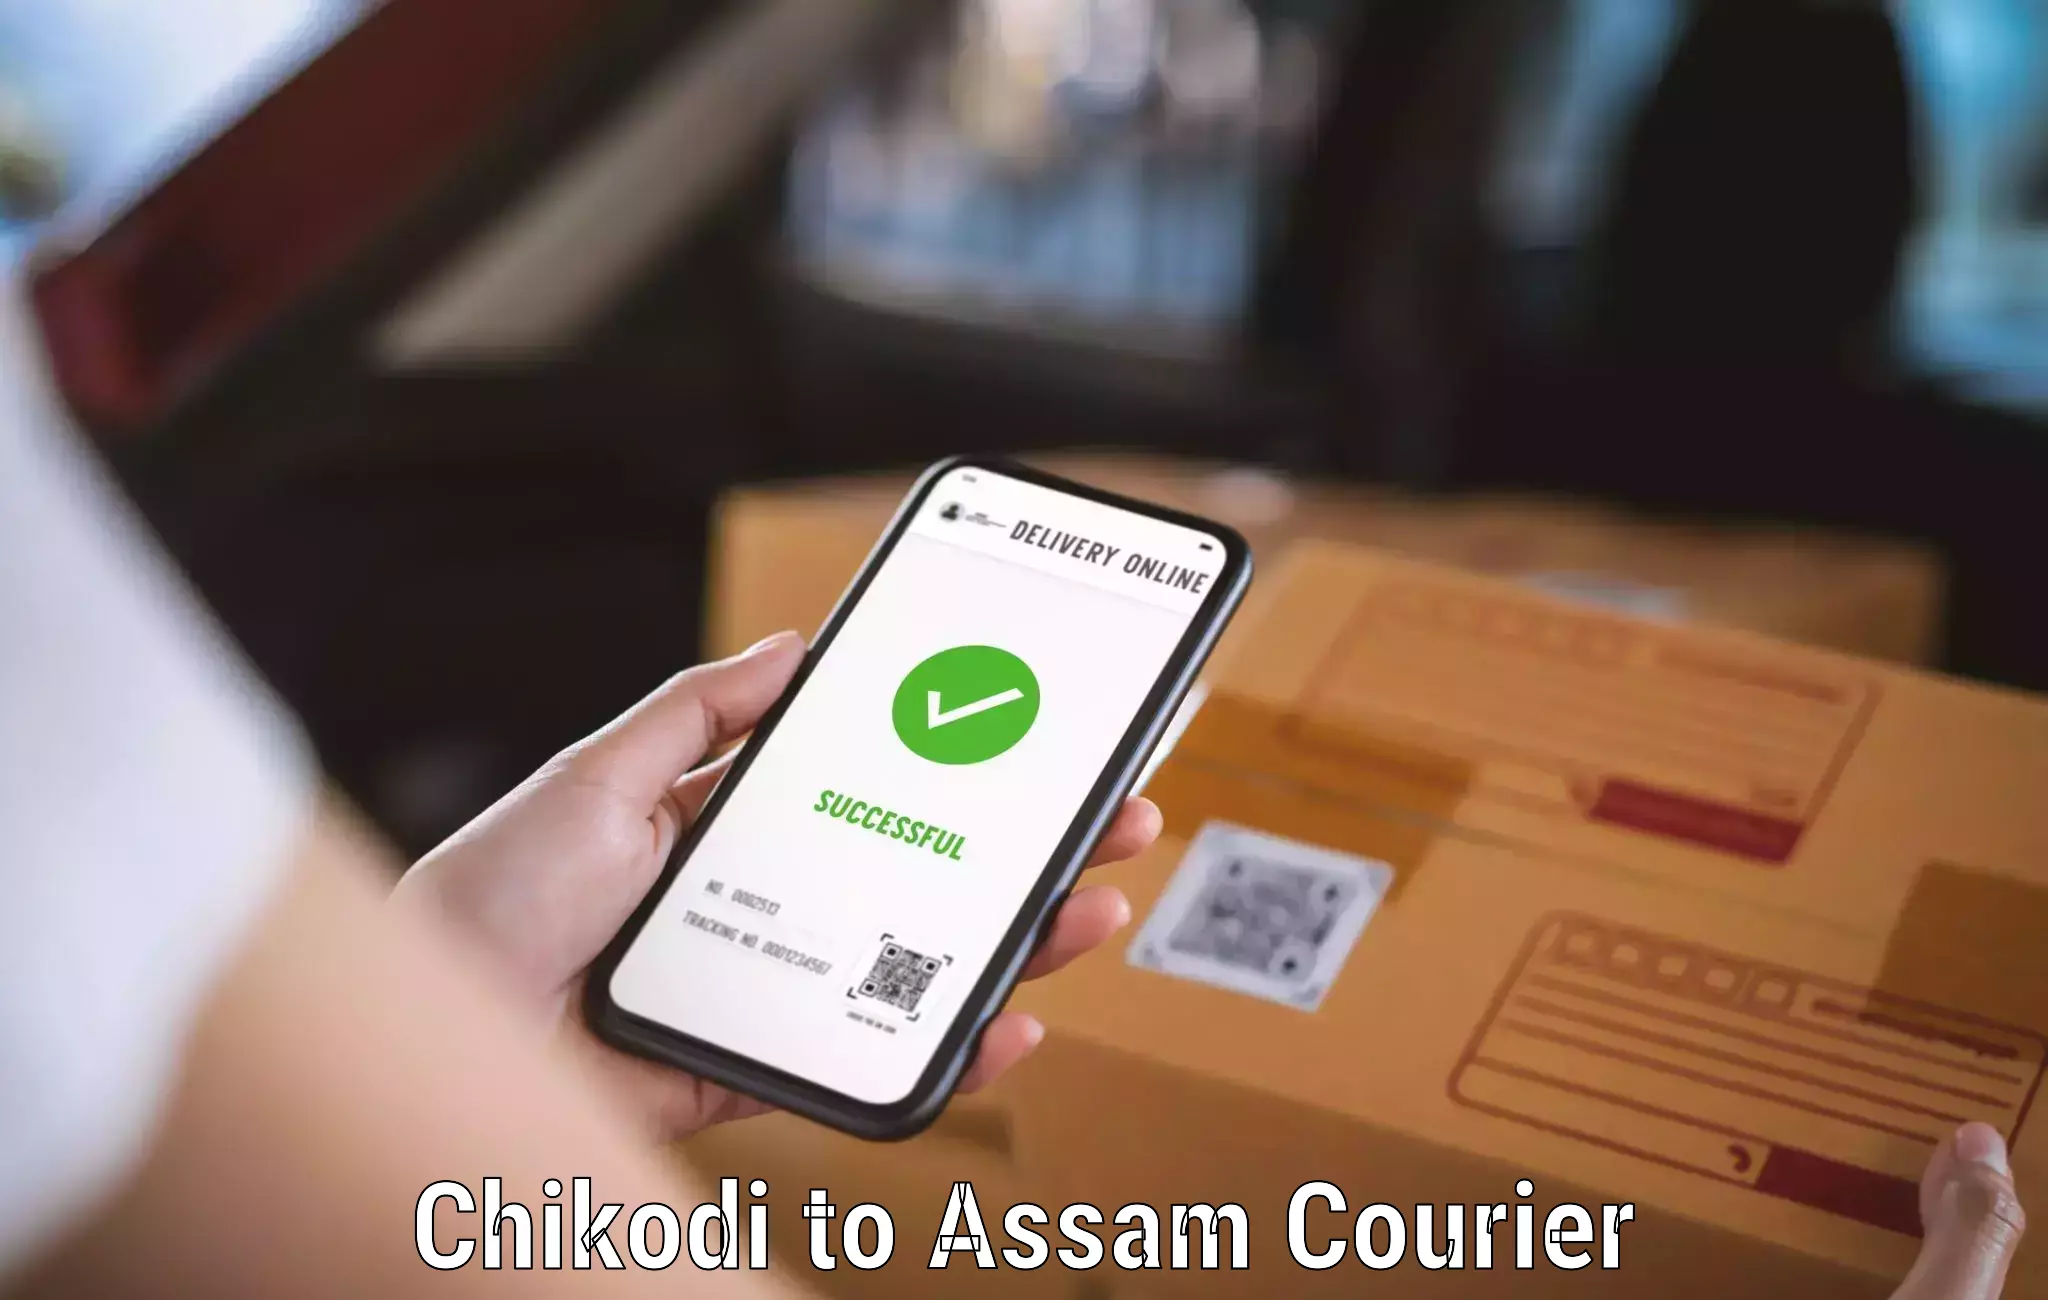 Logistics service provider Chikodi to Lala Assam